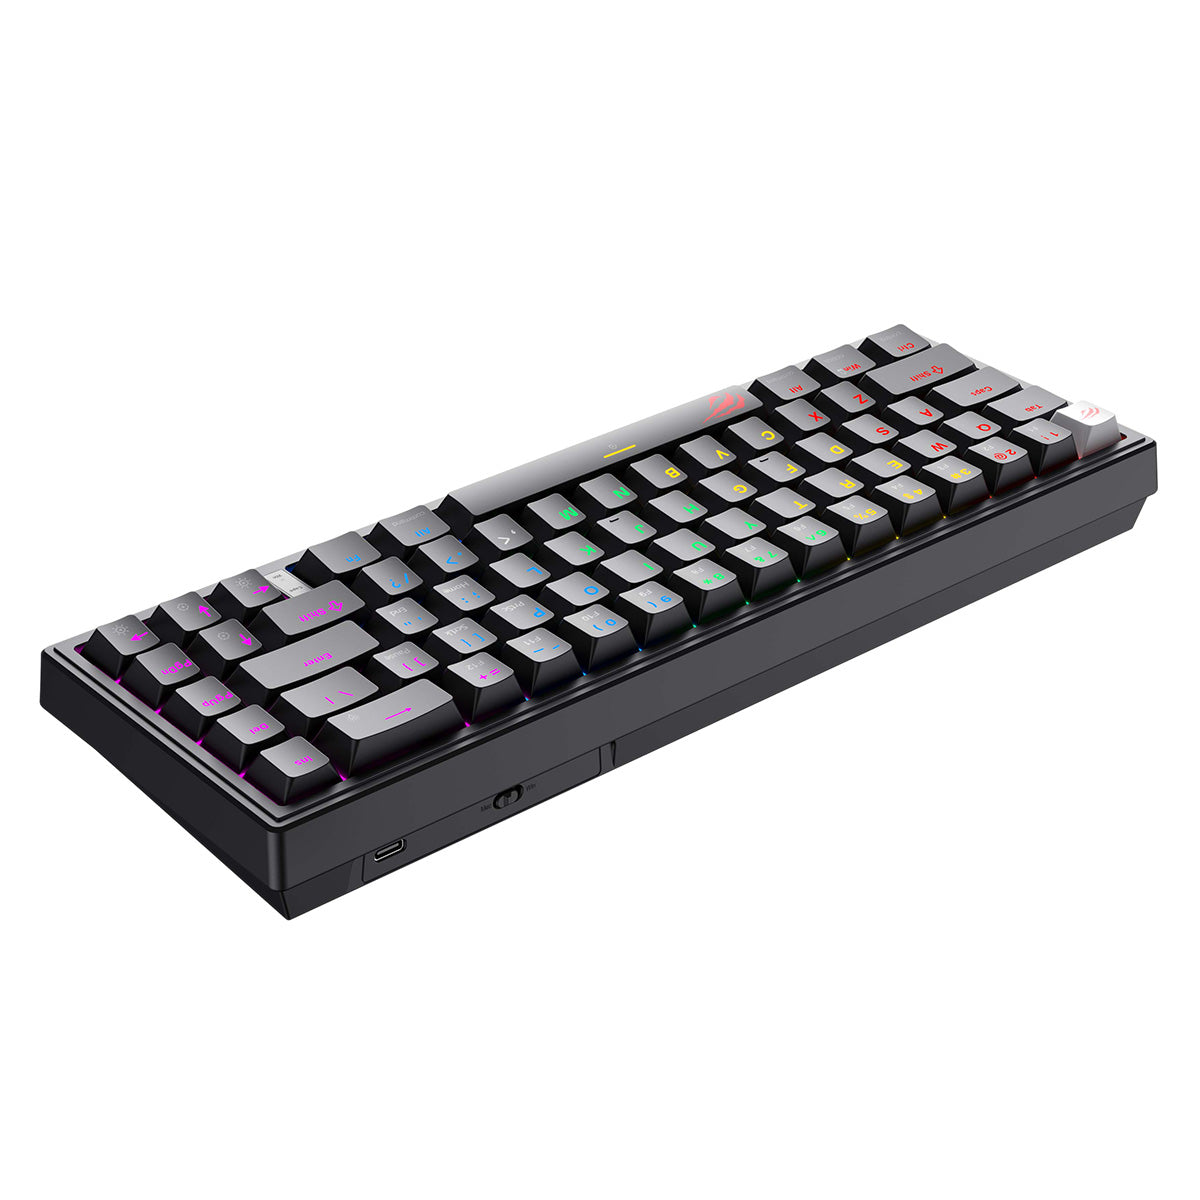 HAVIT KB874L 75% Compact Blended Light Mechanical Keyboard